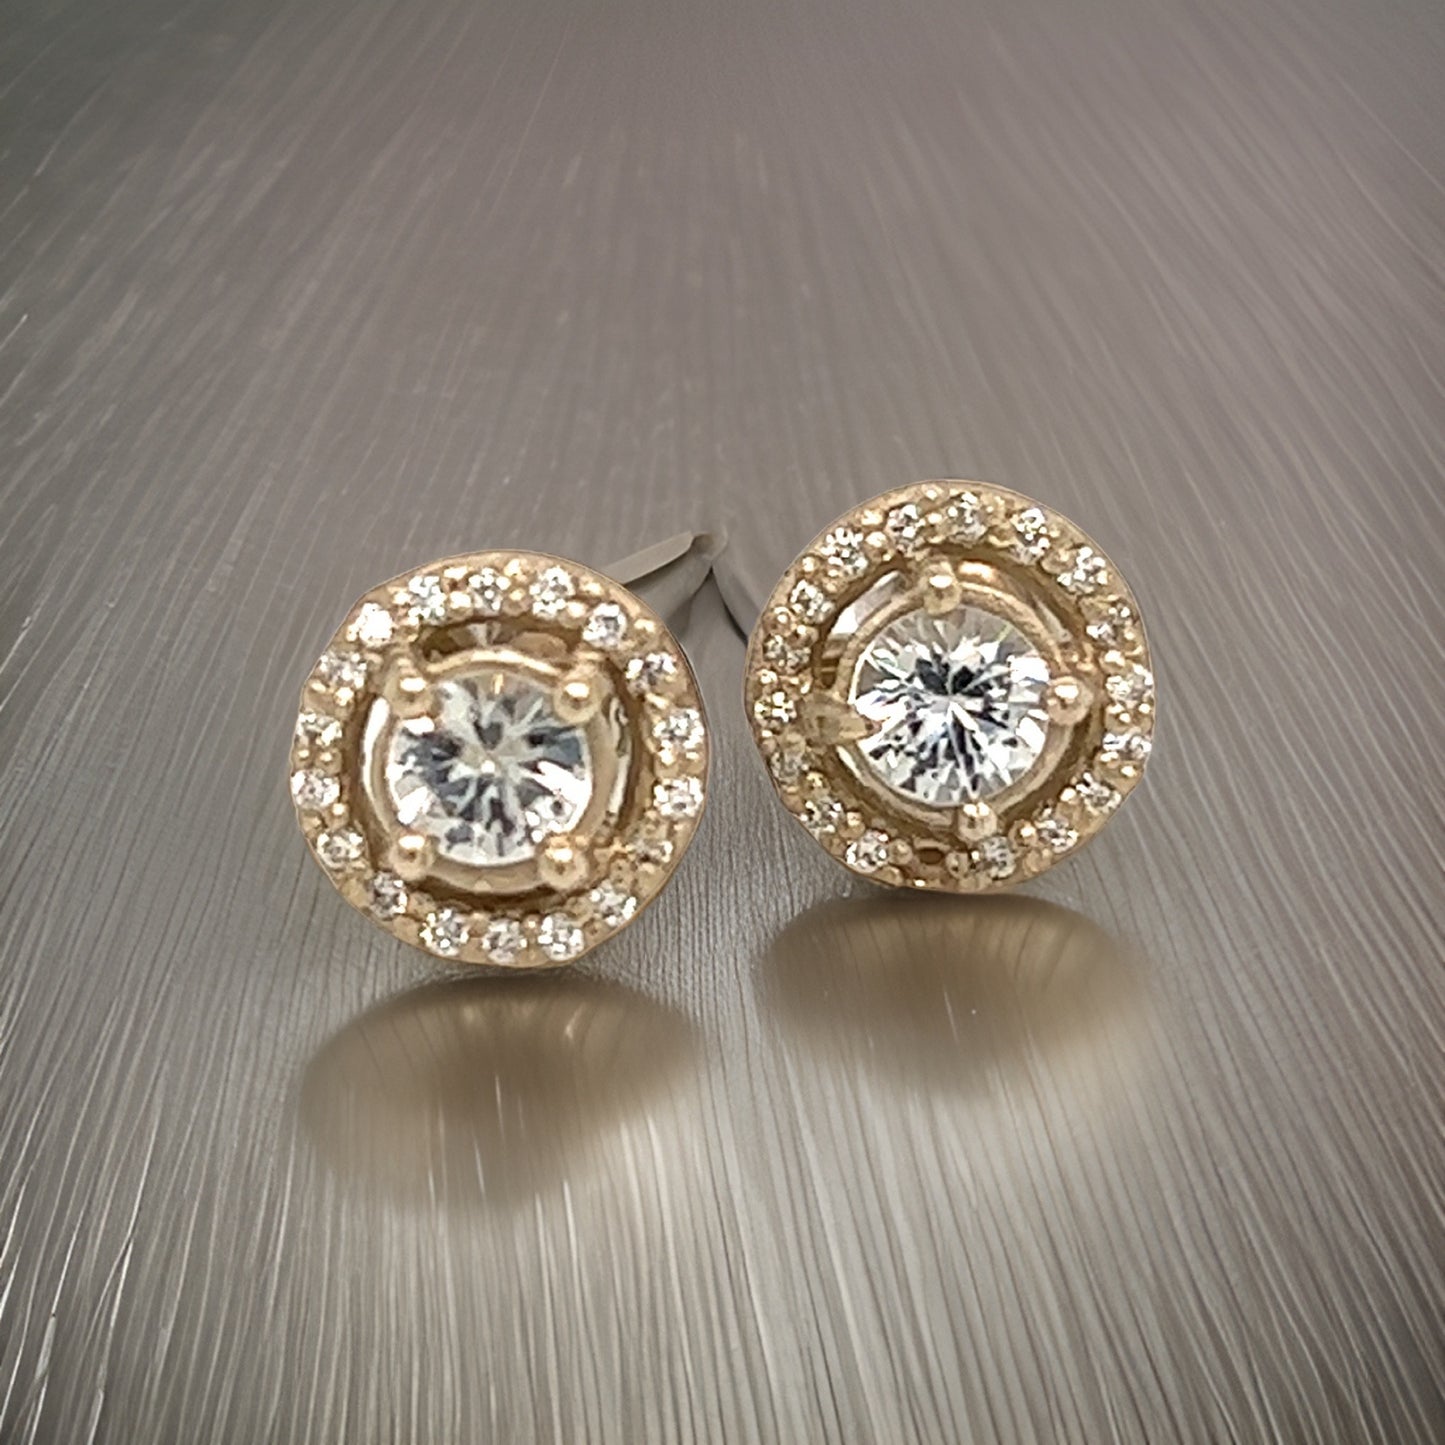 Natural Sapphire Diamond Stud Earrings 14k W Gold 0.83 TCW Certified $2,950 215614